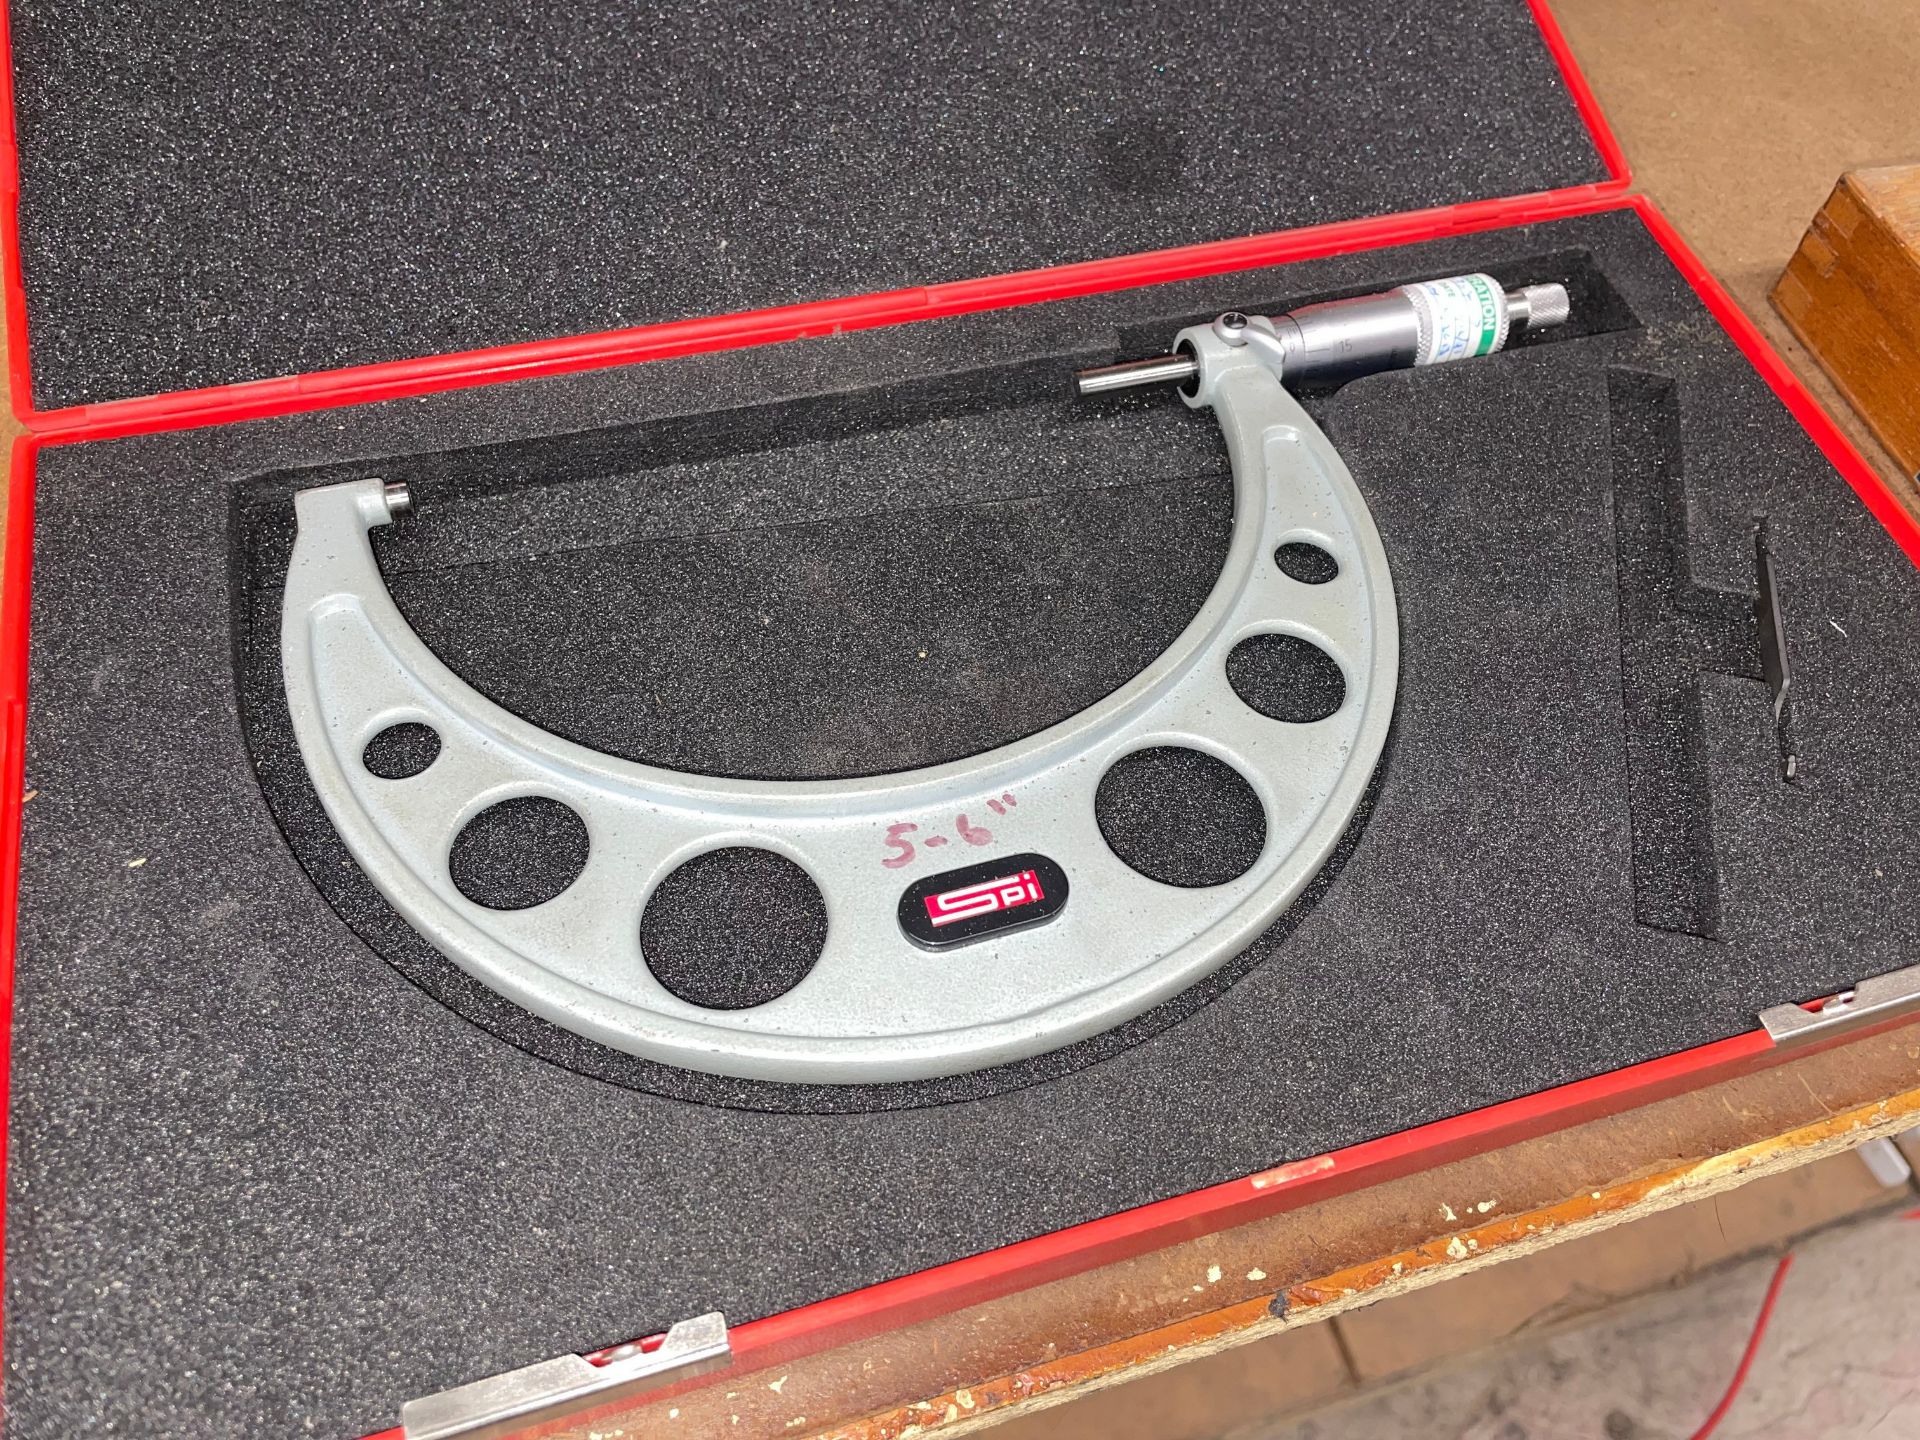 SPI 5" to 6" Micrometer